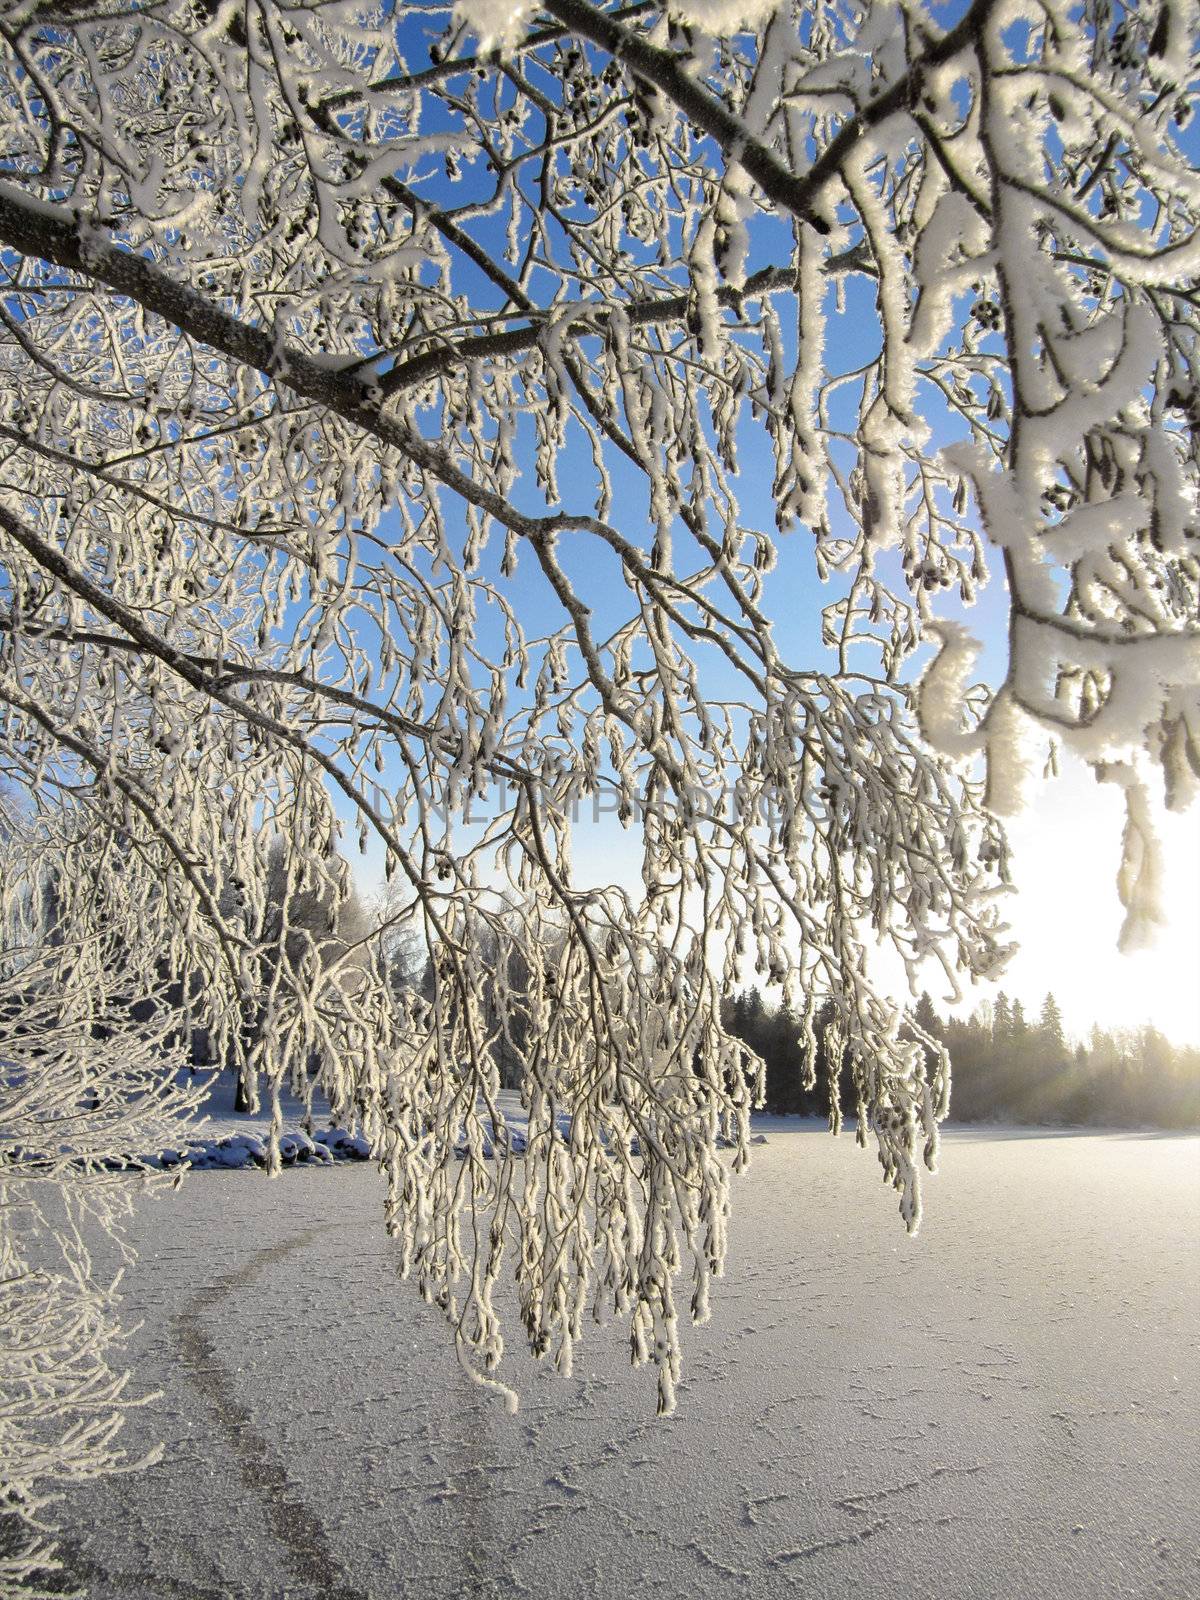 Winter snowy branches tree near frozen lake 